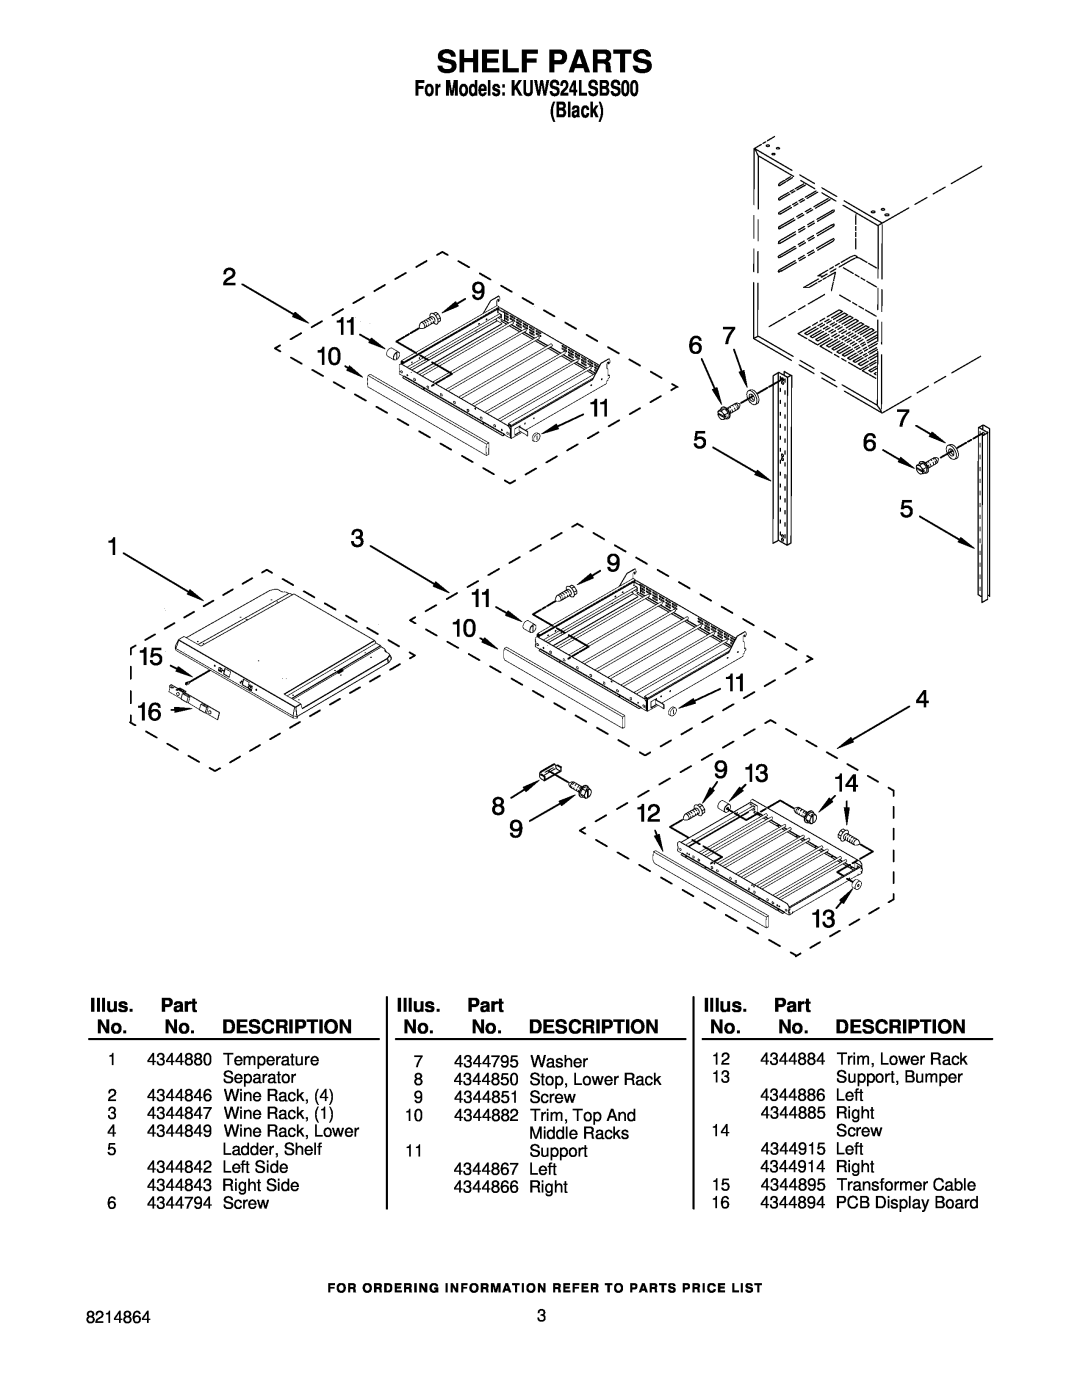 KitchenAid KUWS24LSBS00 manual Shelf Parts, Illus. Part No. No. DESCRIPTION 